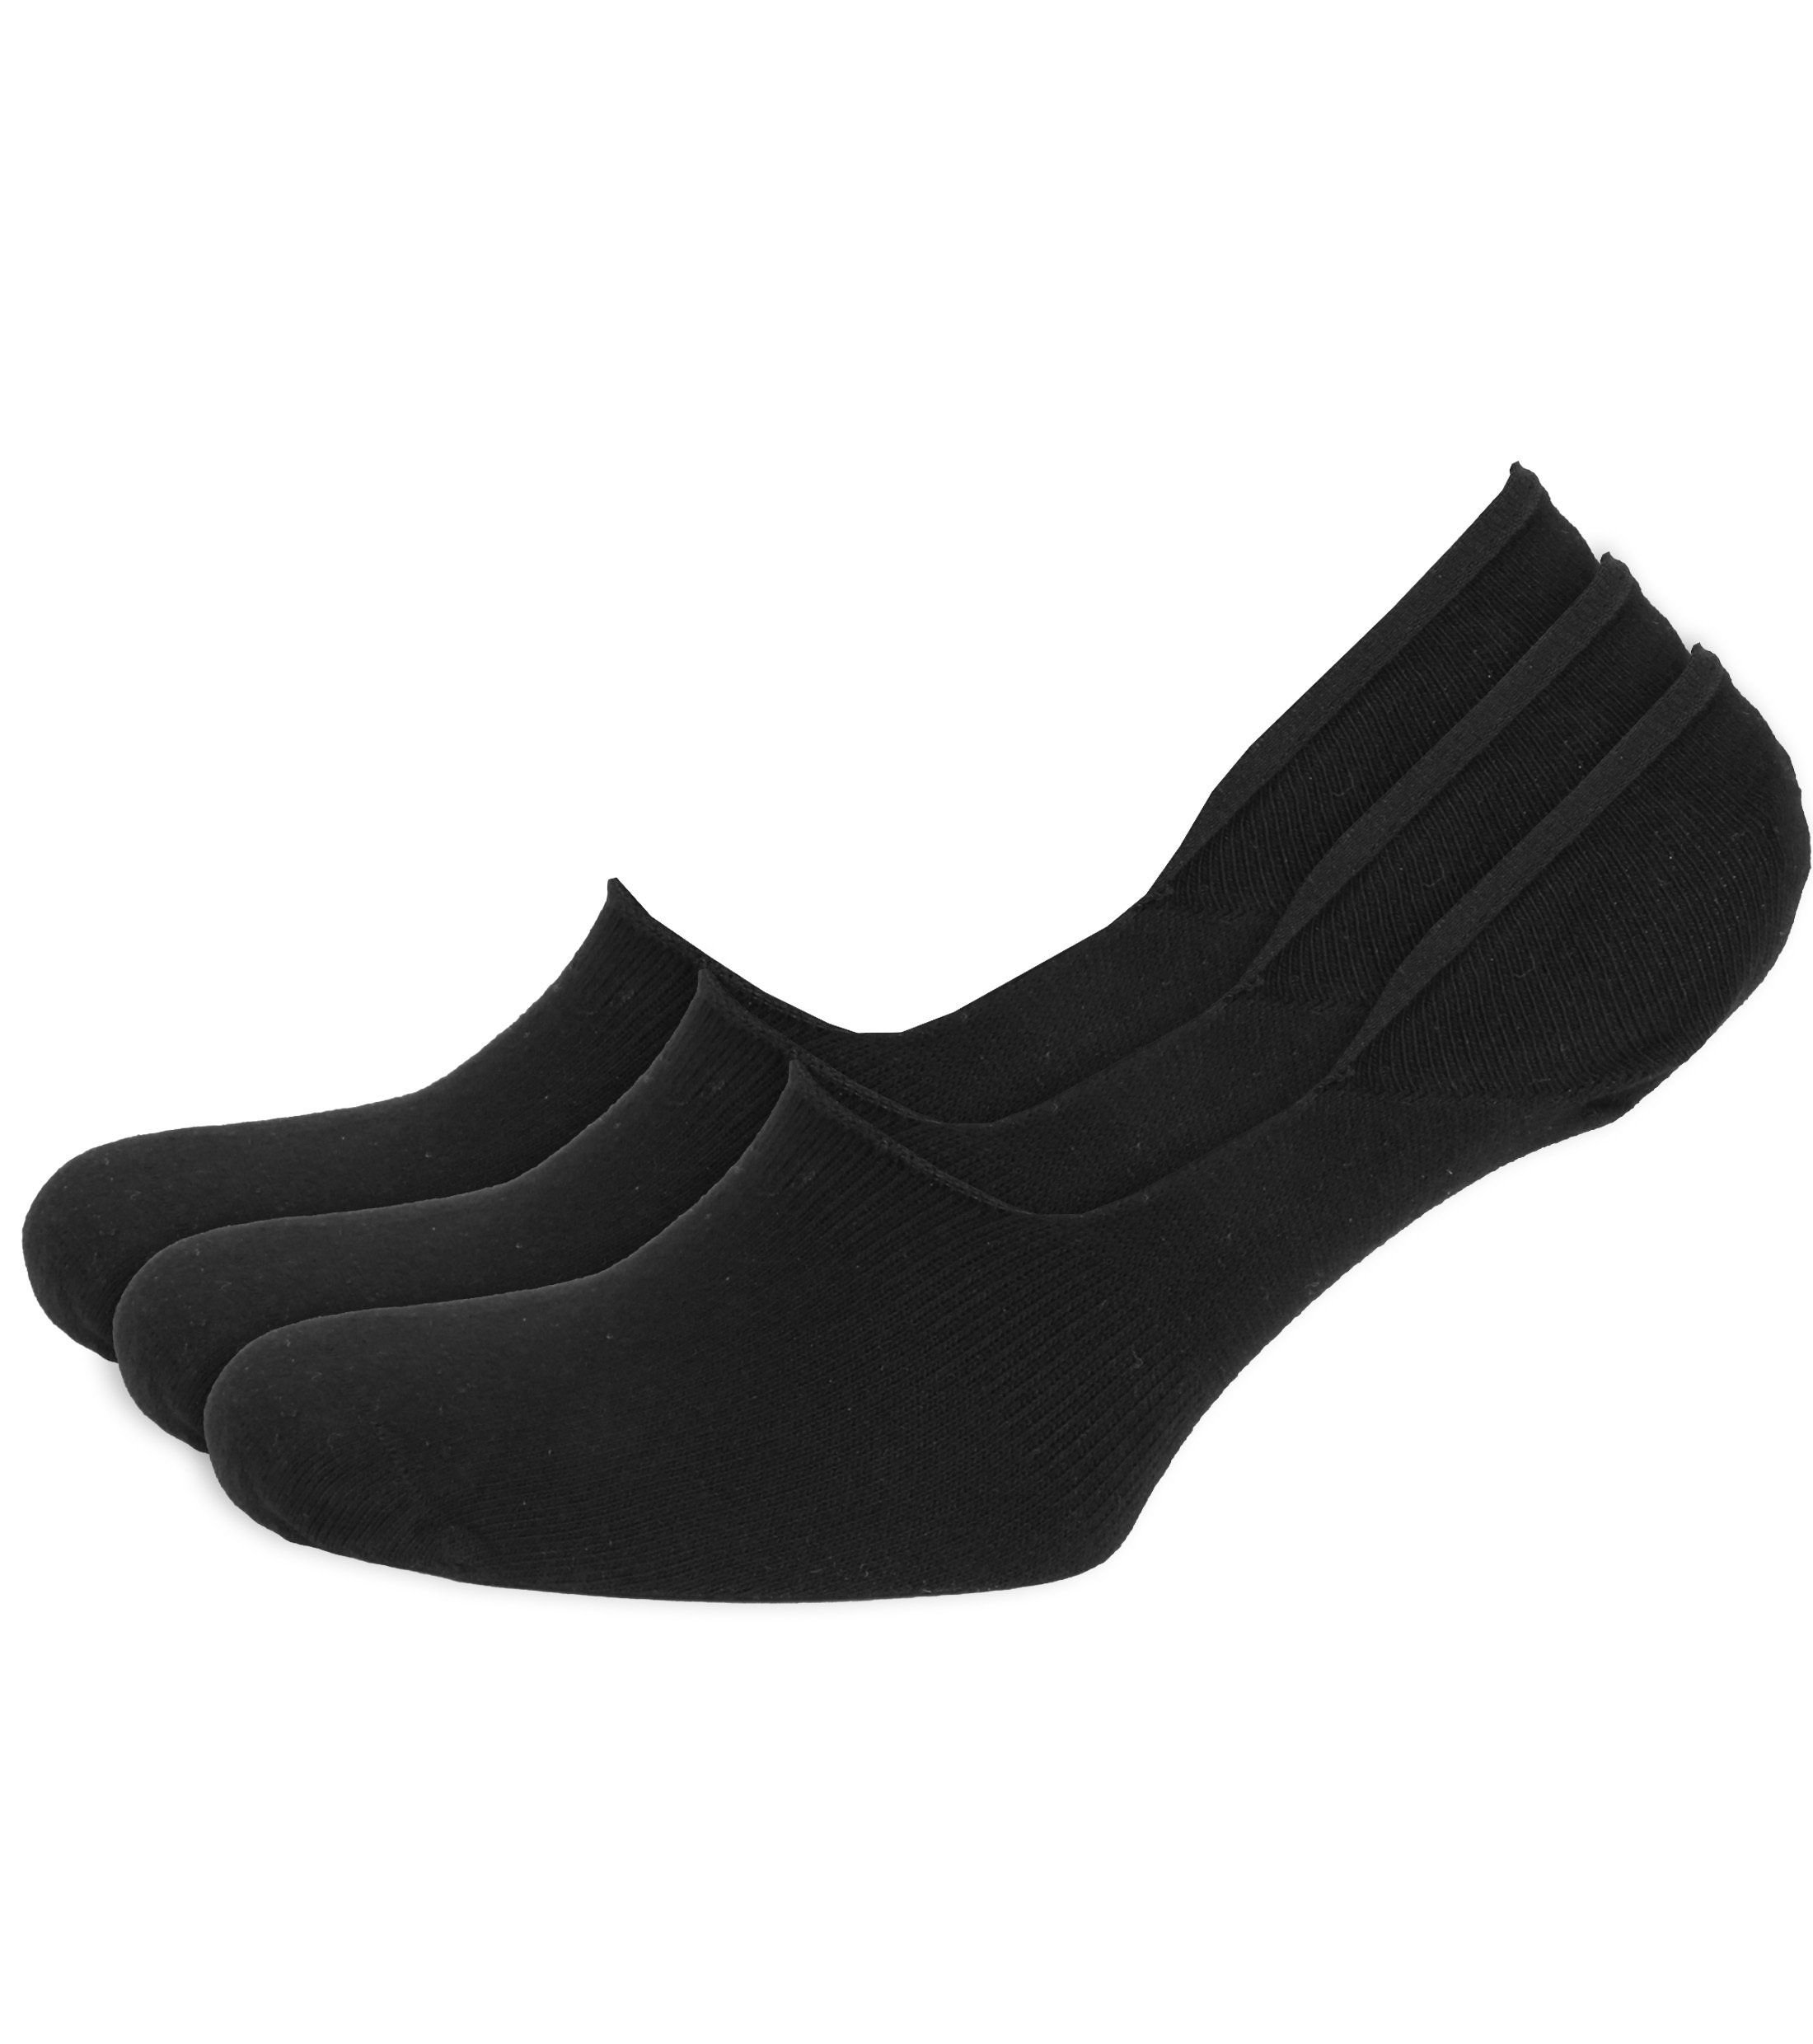 Suitable Sneaker Socks 3-Pack Black size 39-42